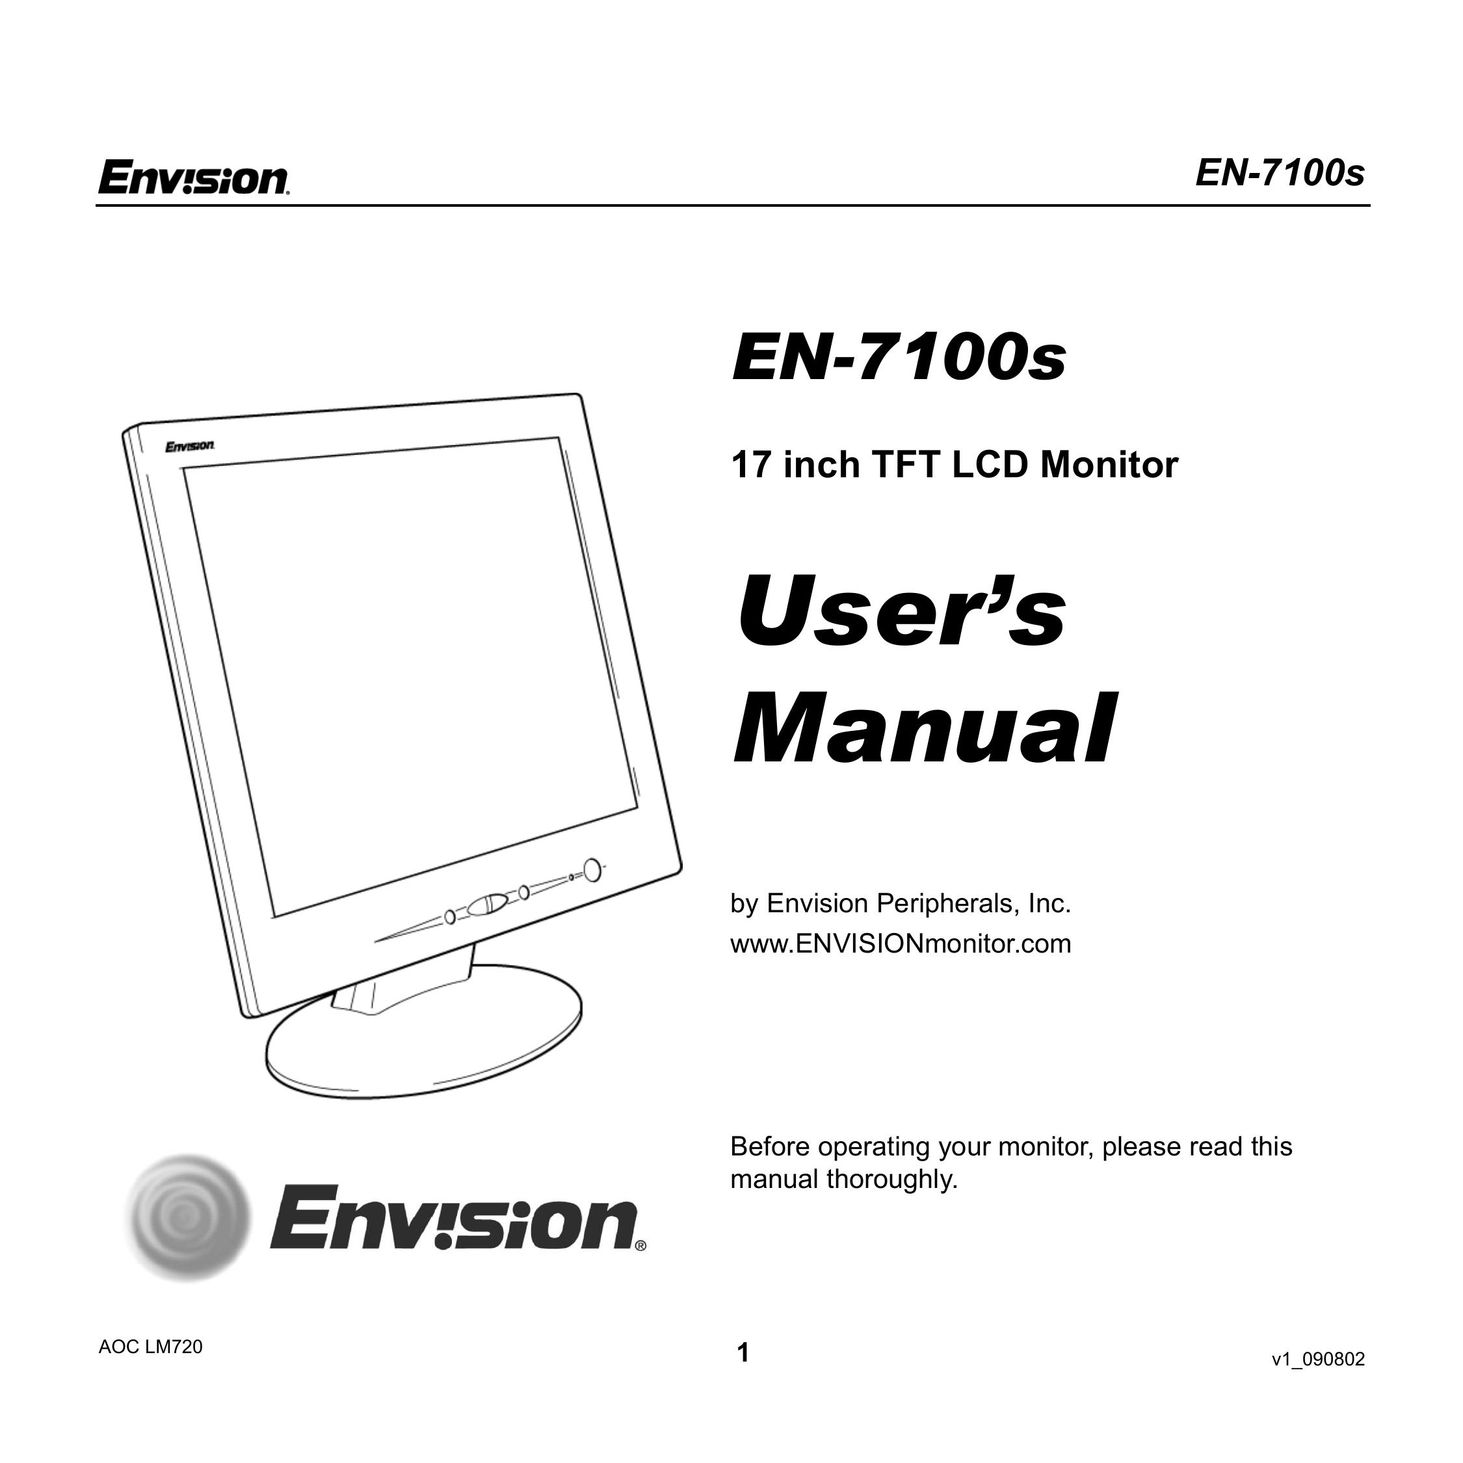 Envision Peripherals EN-7100S Computer Monitor User Manual